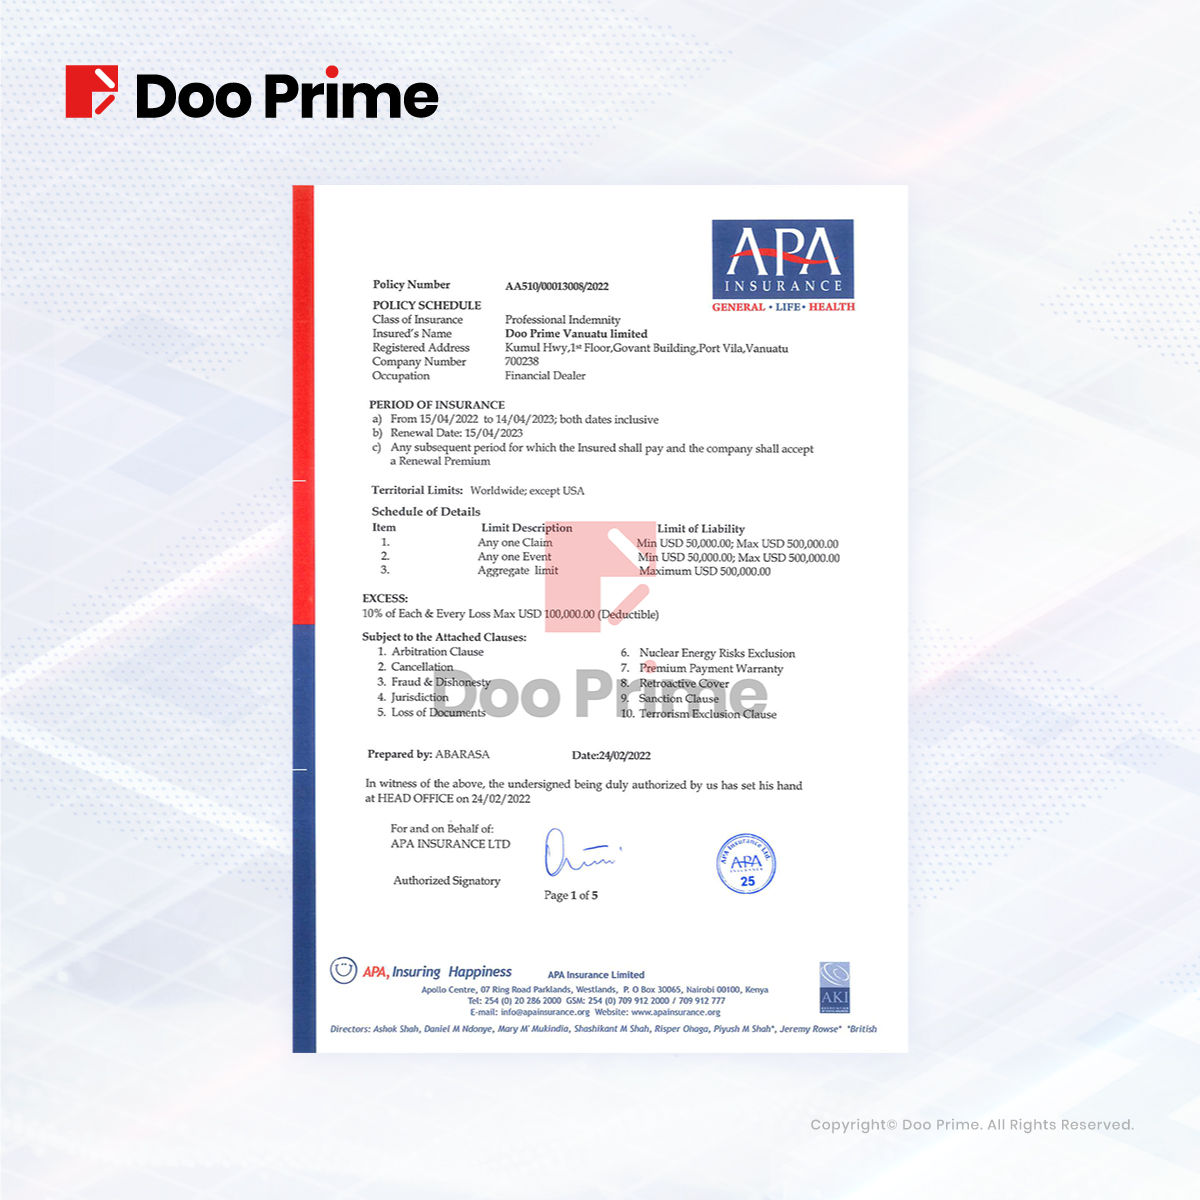 Doo Prime 续签专业责任赔偿保险（PII），多重保障守护客户资金安全 